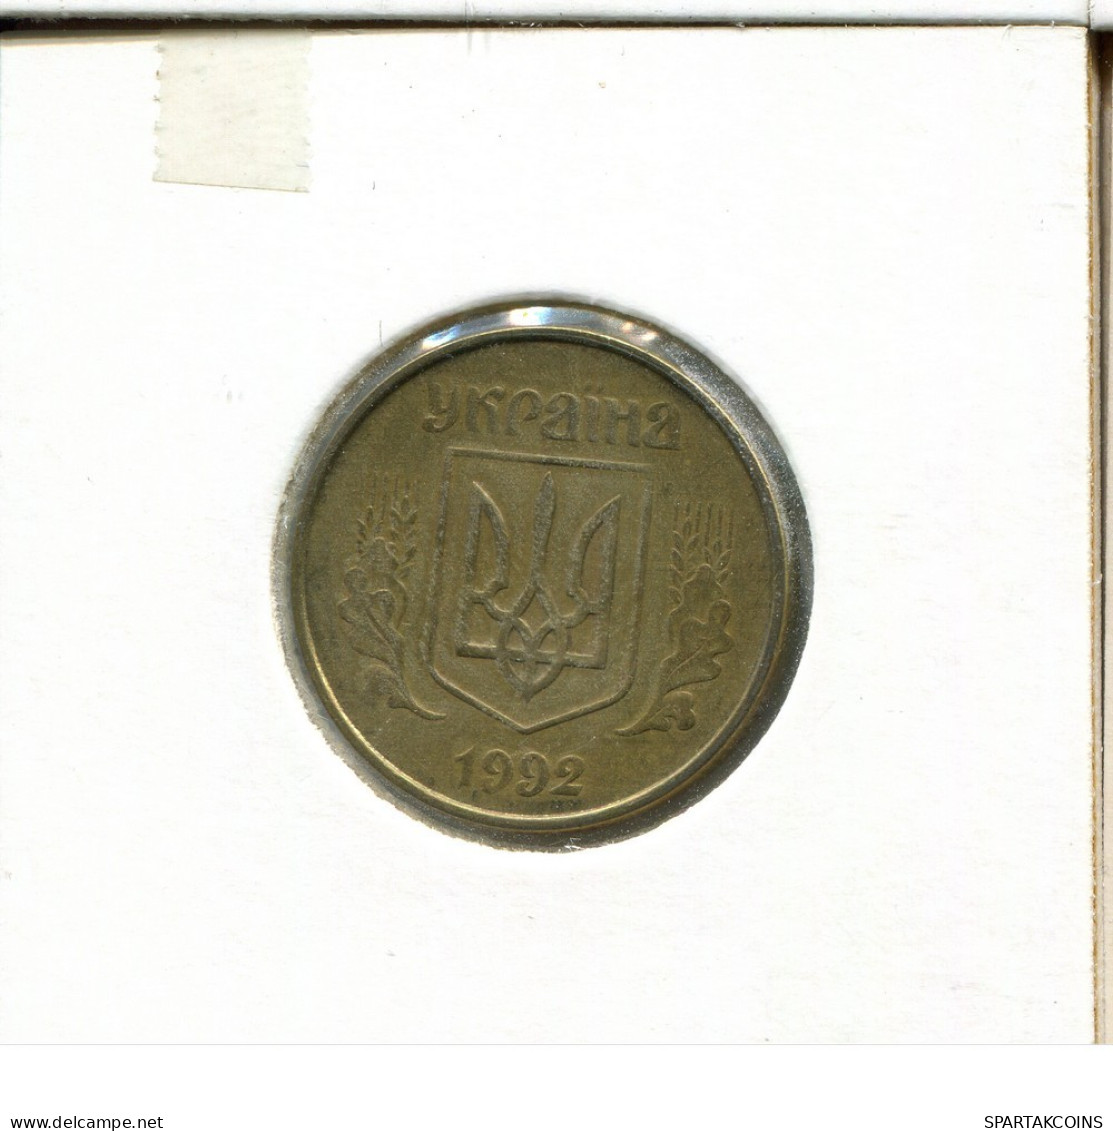 50 Kopiiok 1992 UKRAINE Coin #AS060.U.A - Ucrania